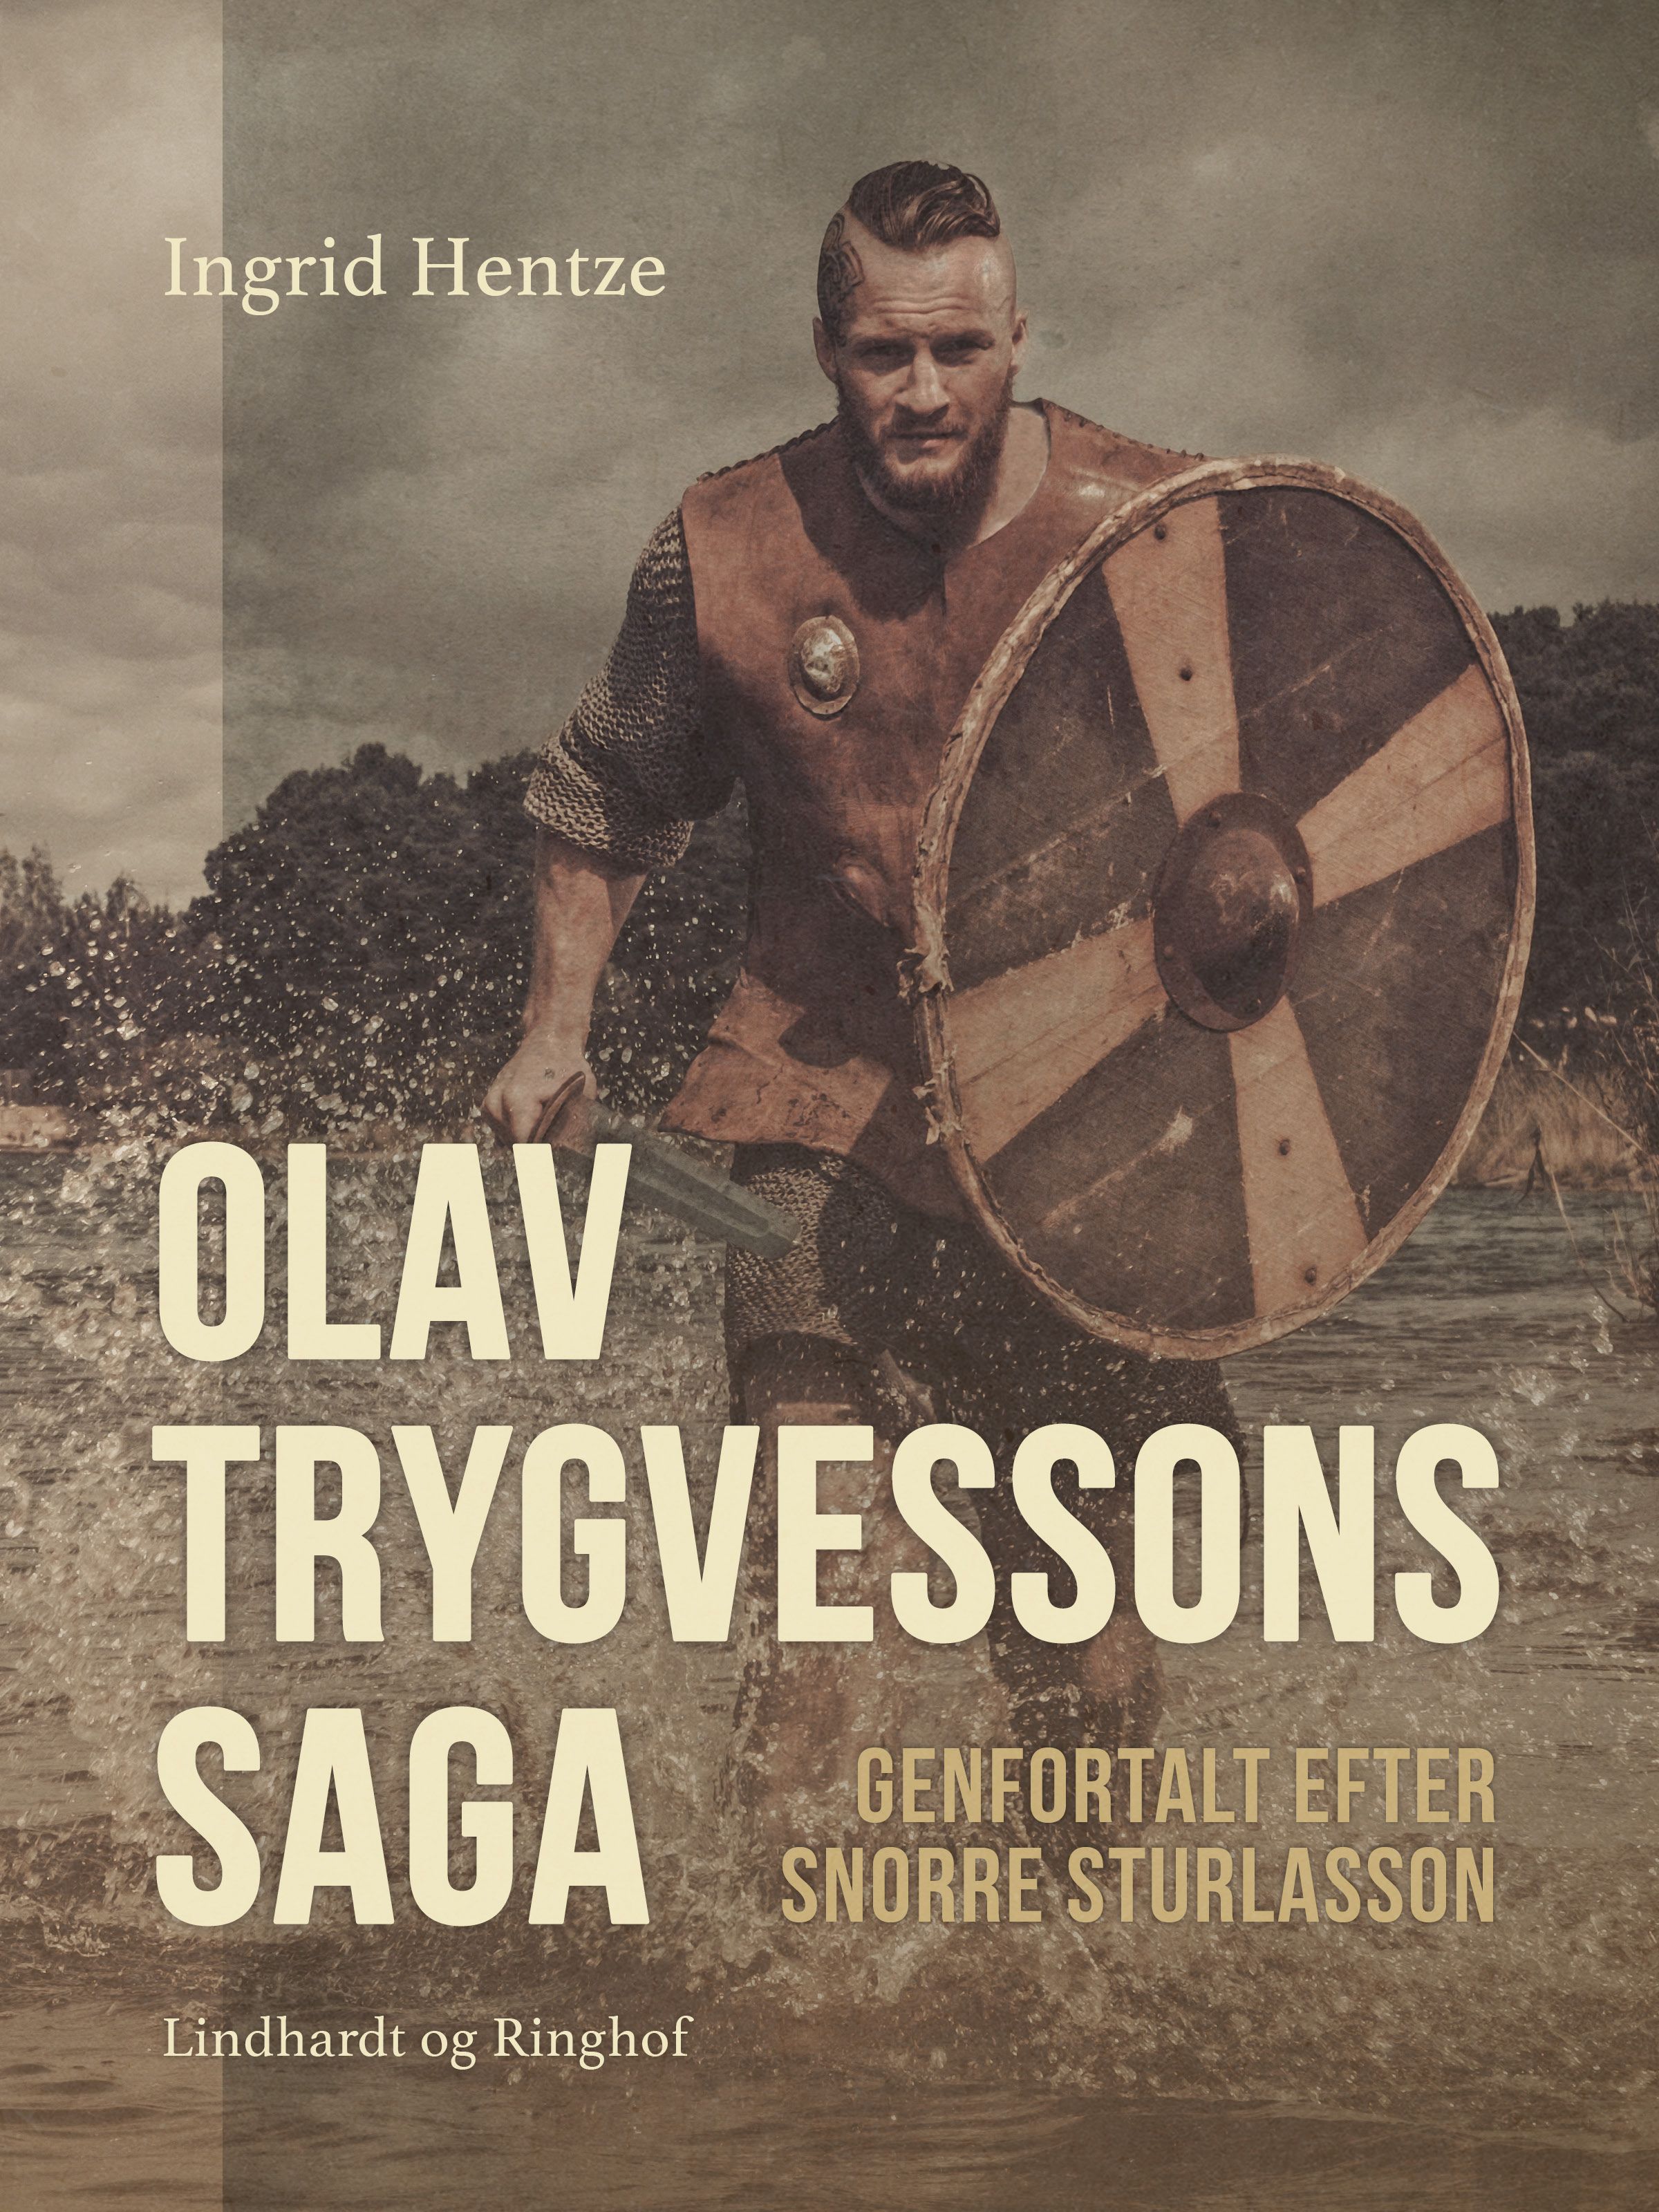 Olav Trygvessons saga. Genfortalt efter Snorre Sturlasson, eBook by Ingrid Hentze